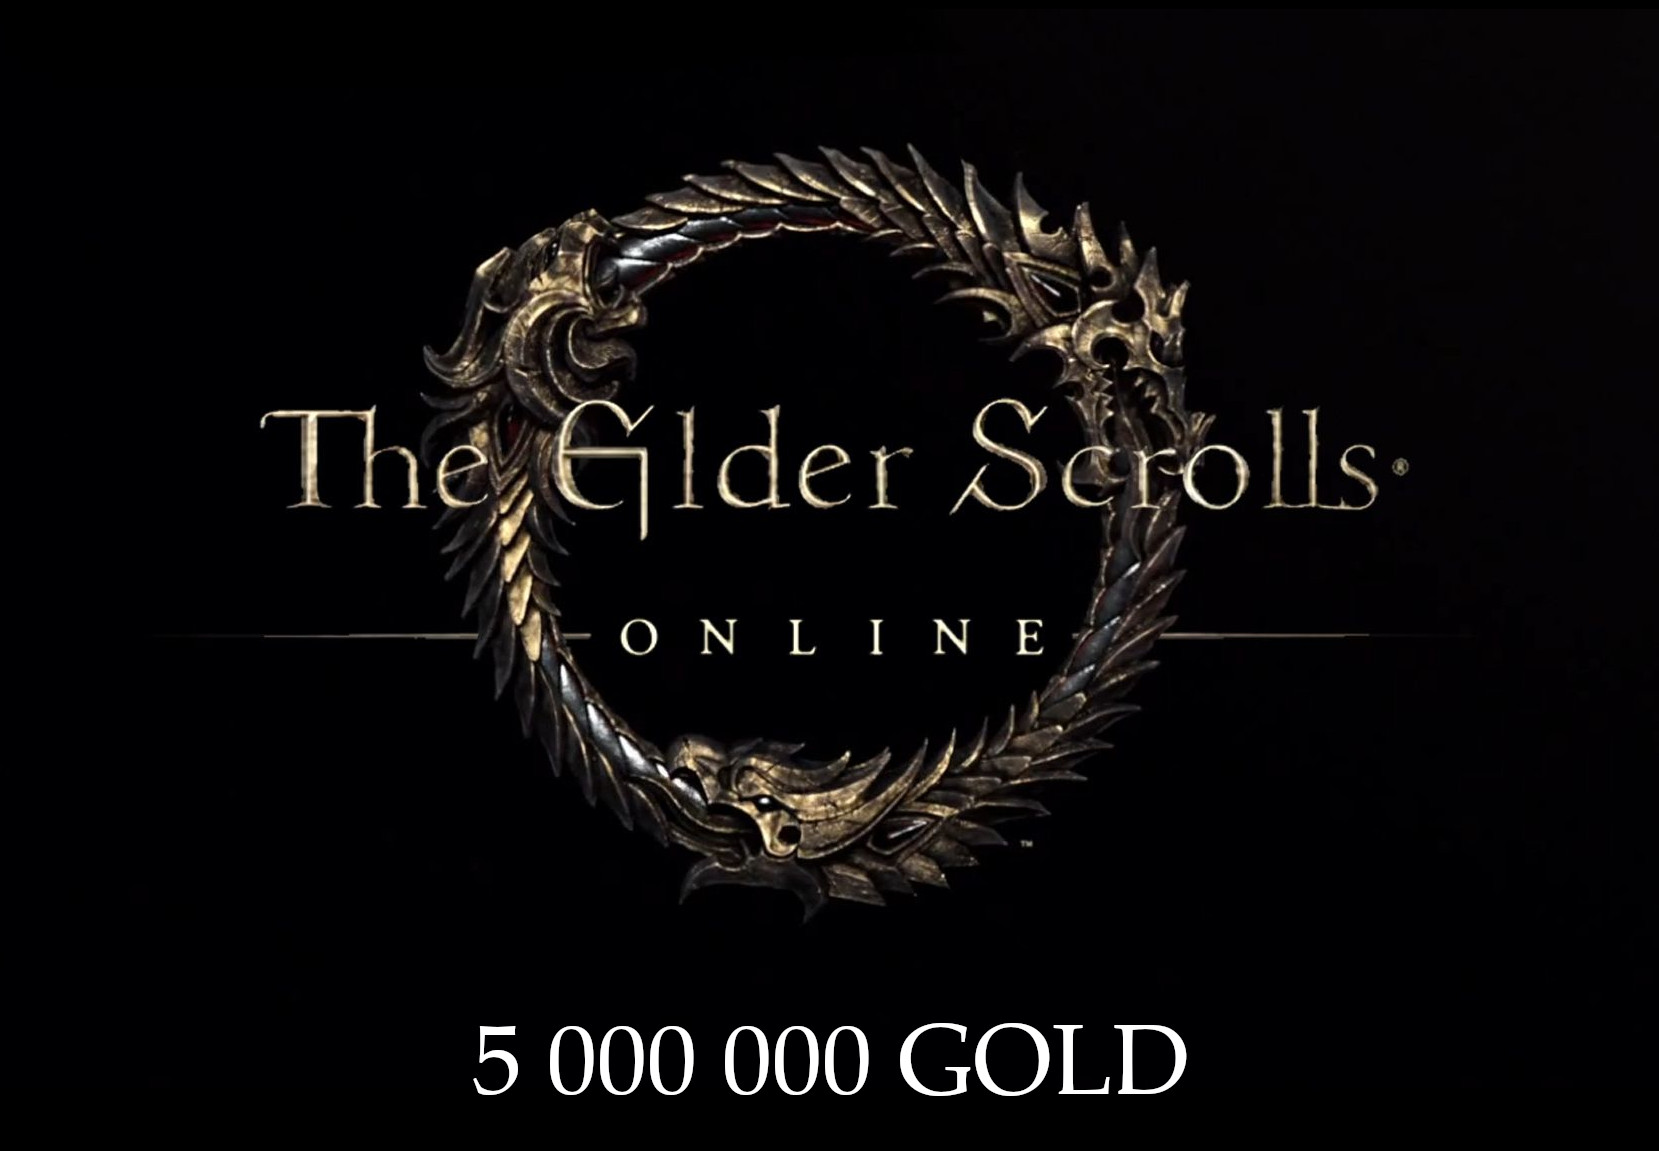 The Elder Scrolls Online - 5000k Gold - NORTH AMERICA PC/MAC